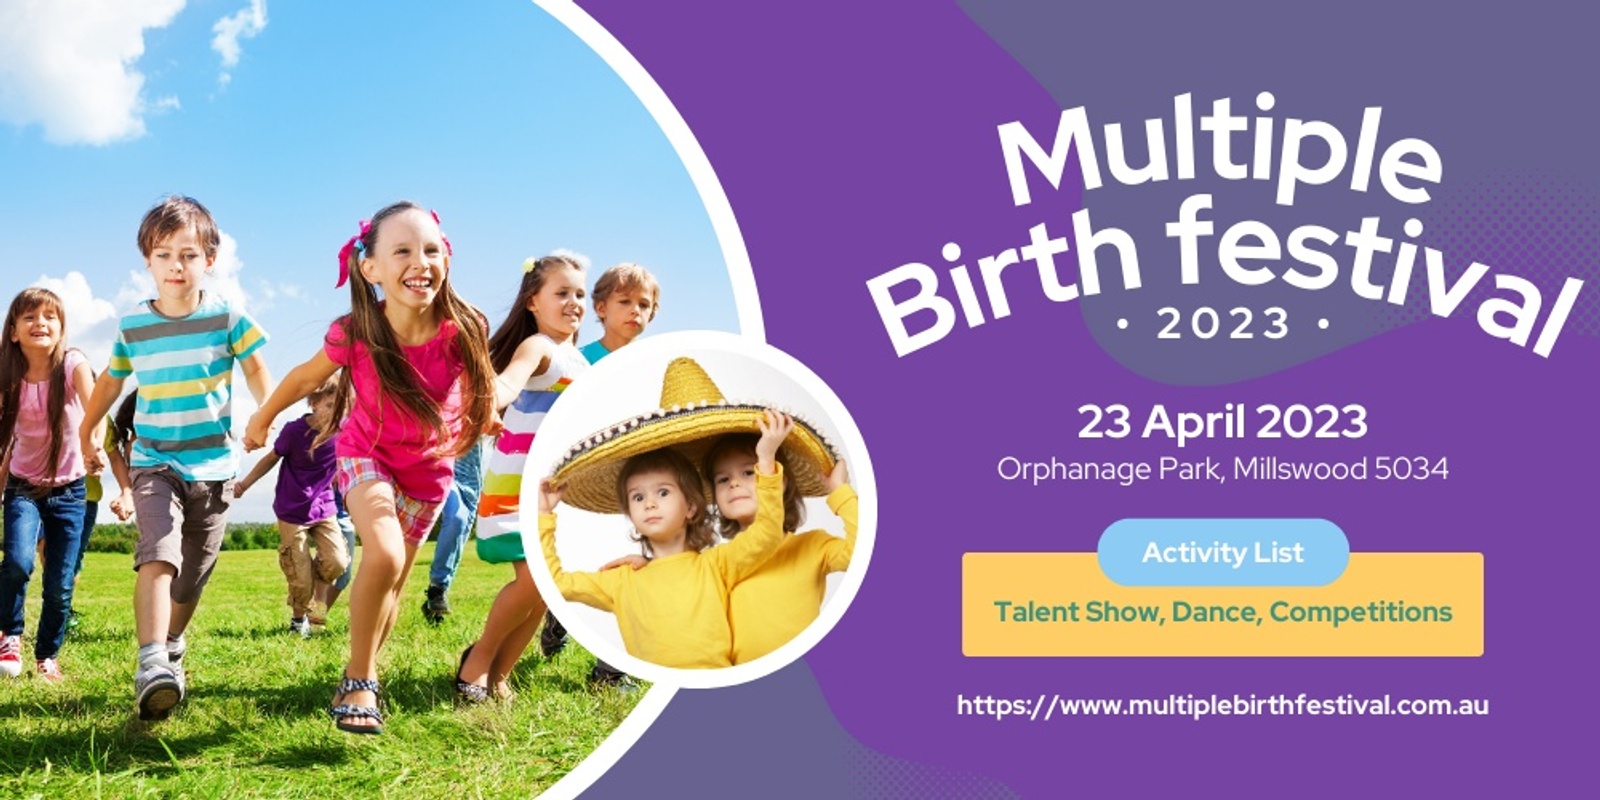 Banner image for Multiple Birth Festival